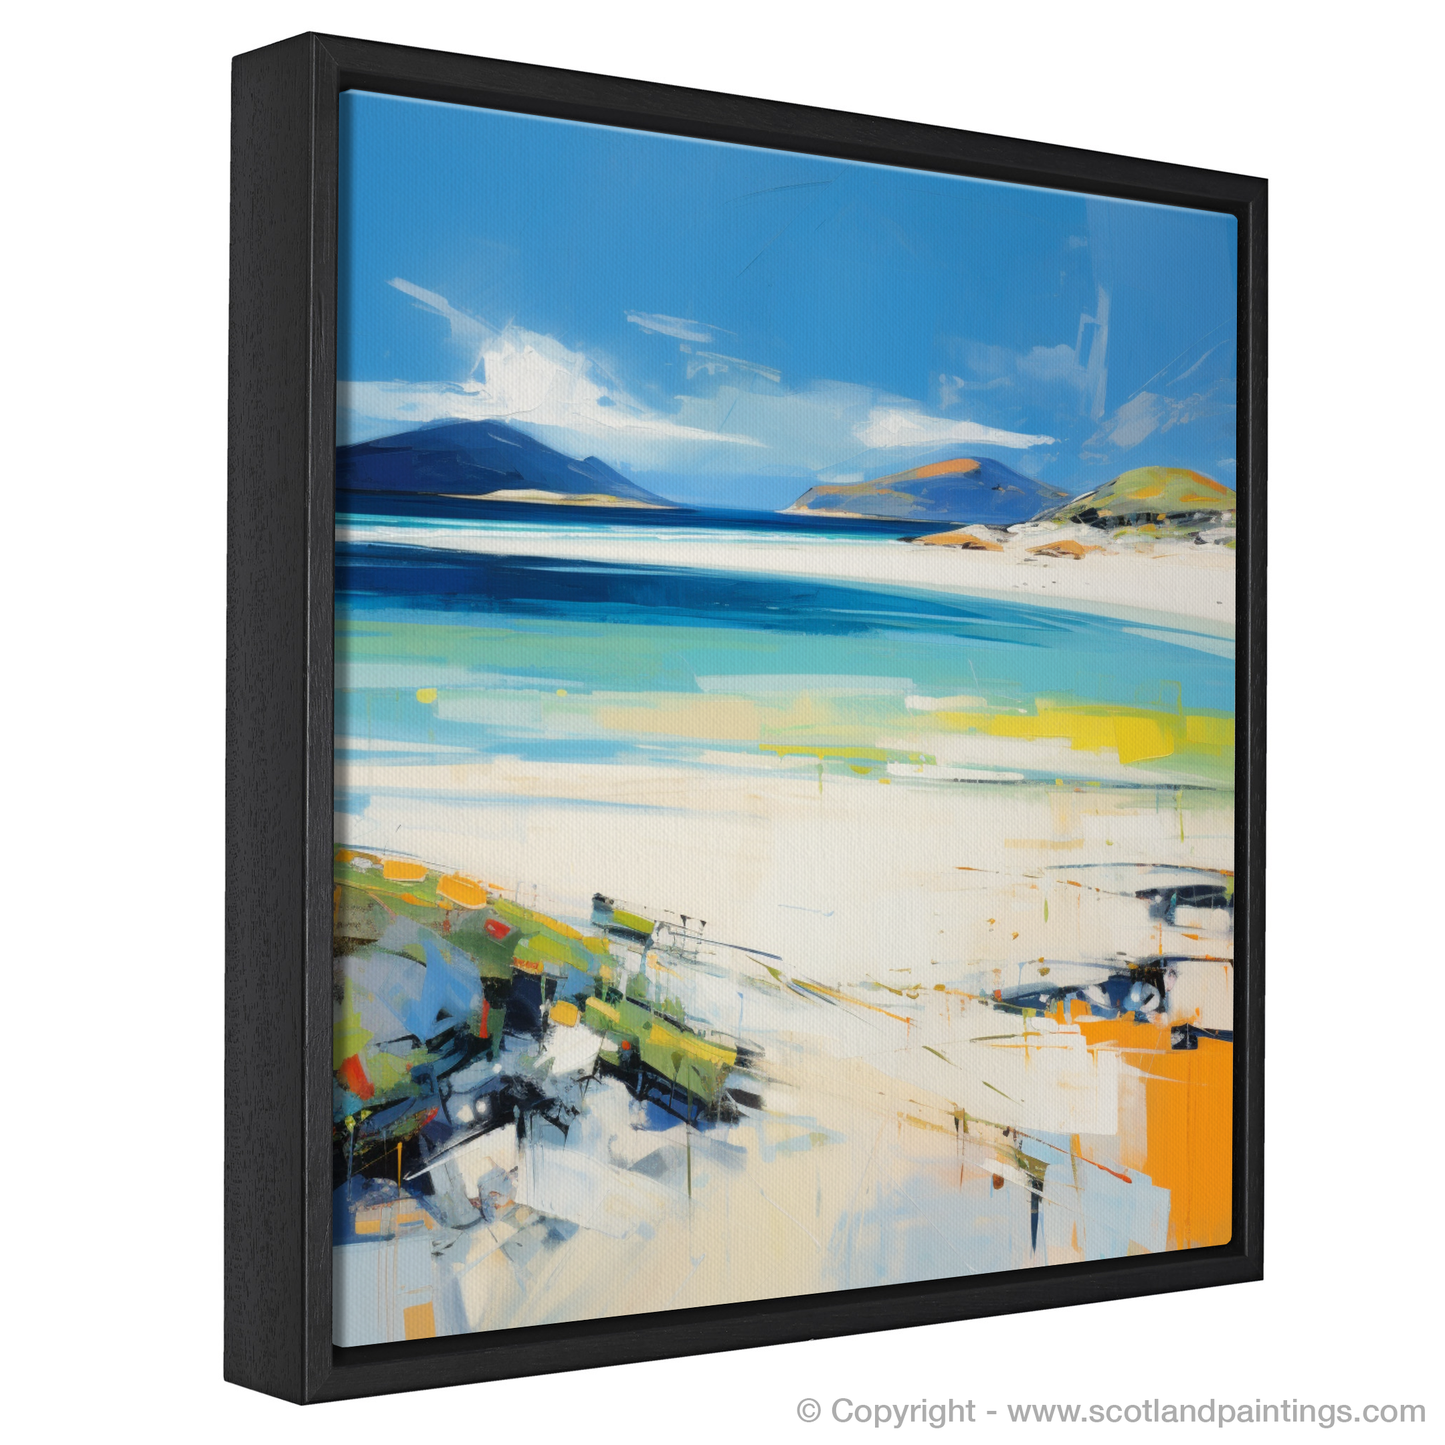 Painting and Art Print of Luskentyre Beach, Isle of Harris entitled "Luskentyre Beach Impressions: A Journey Through Scottish Coastal Splendour".